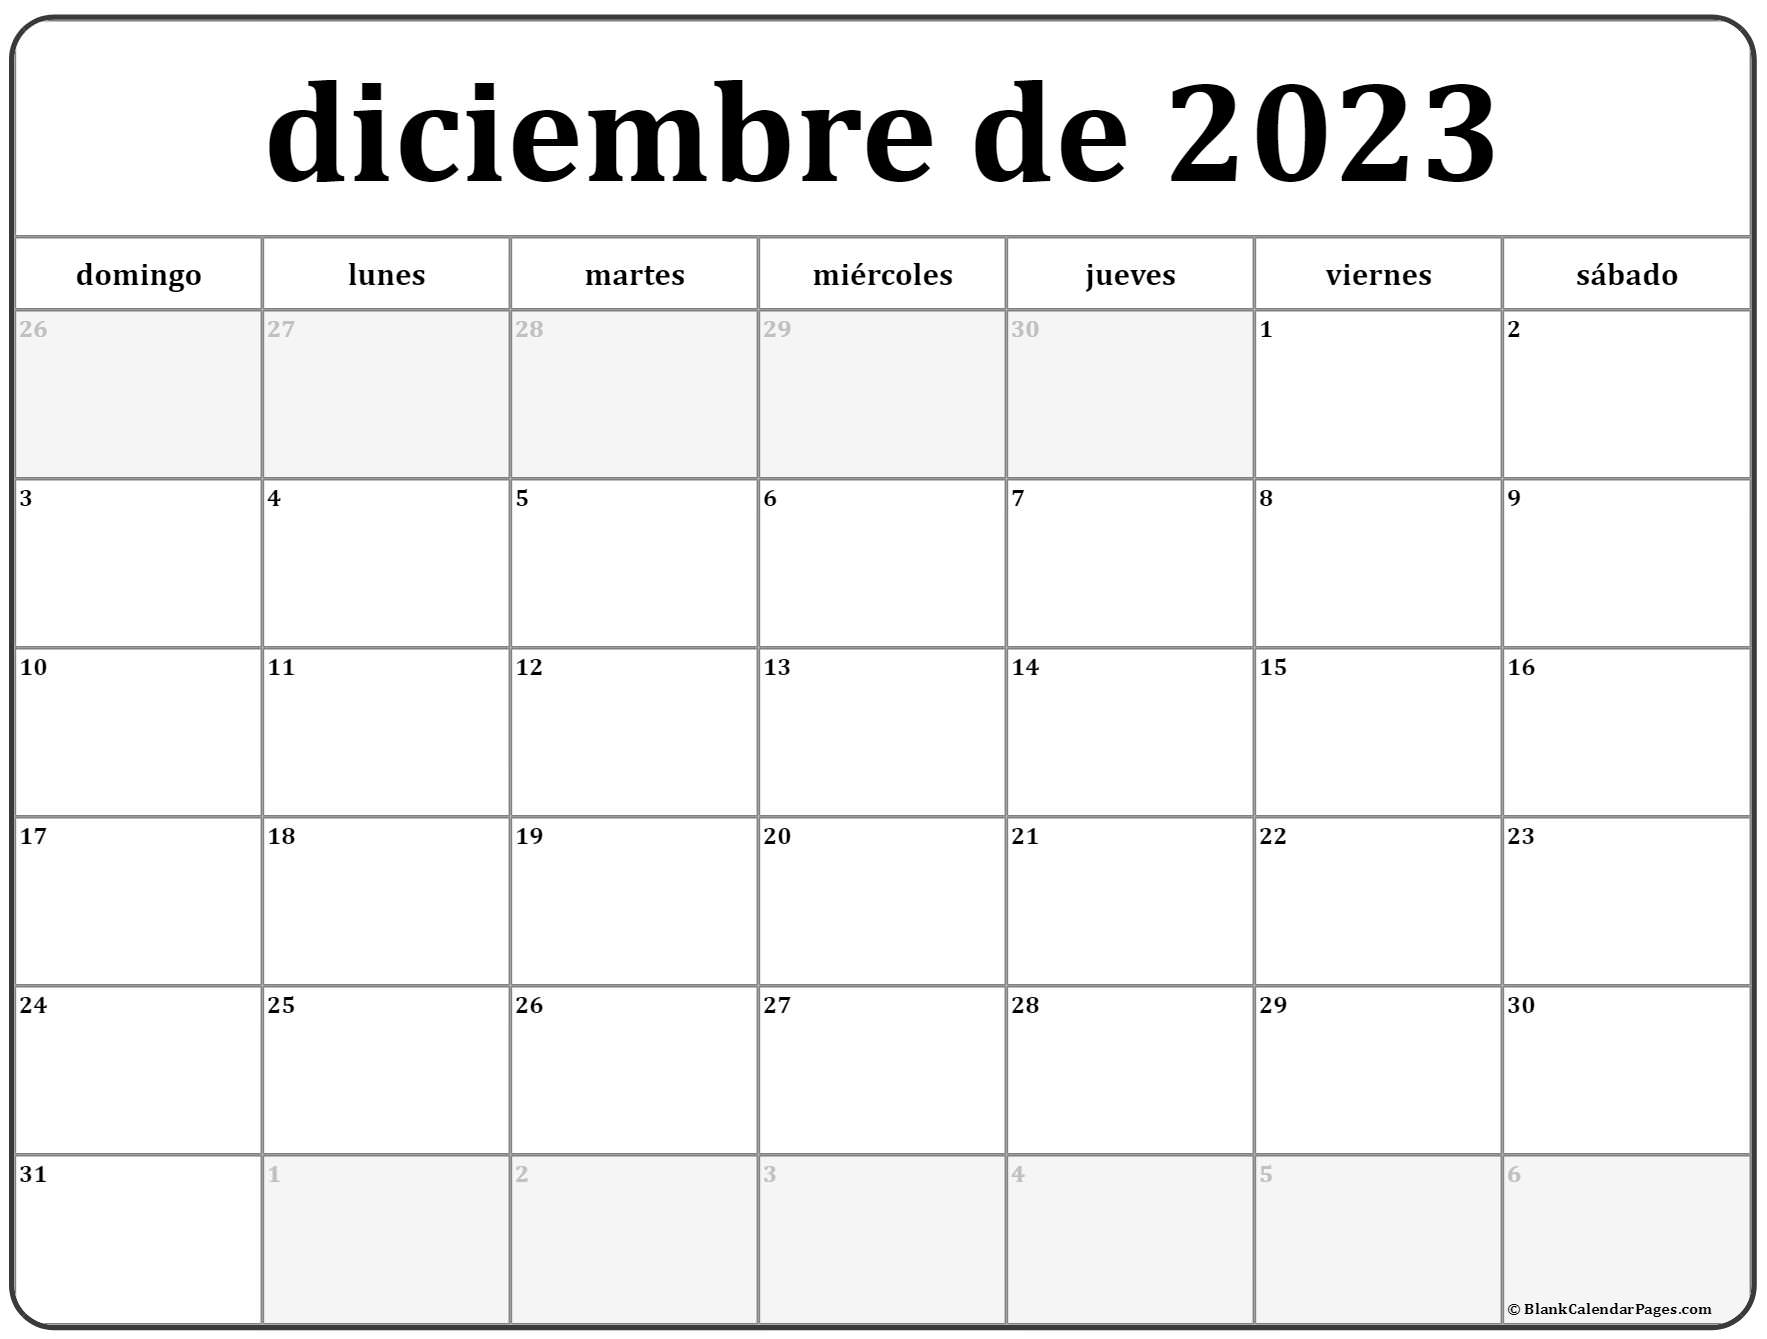 Calendario mensual diciembre 2023 para imprimir